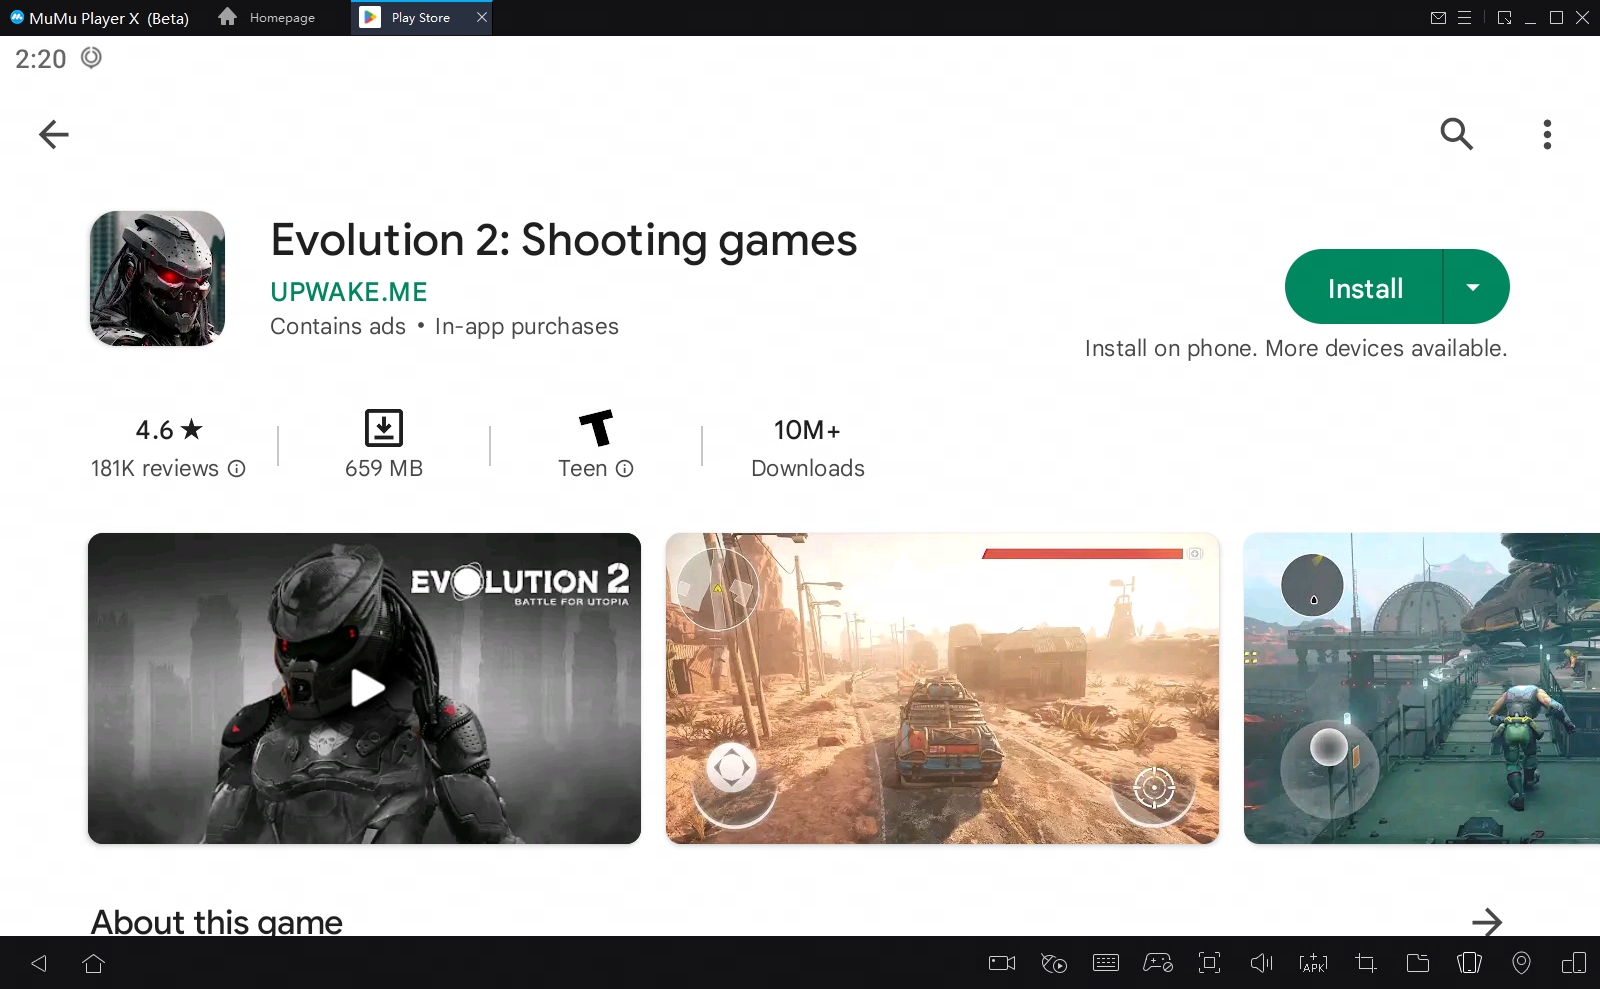 Evolution 2: Shooting games on PC